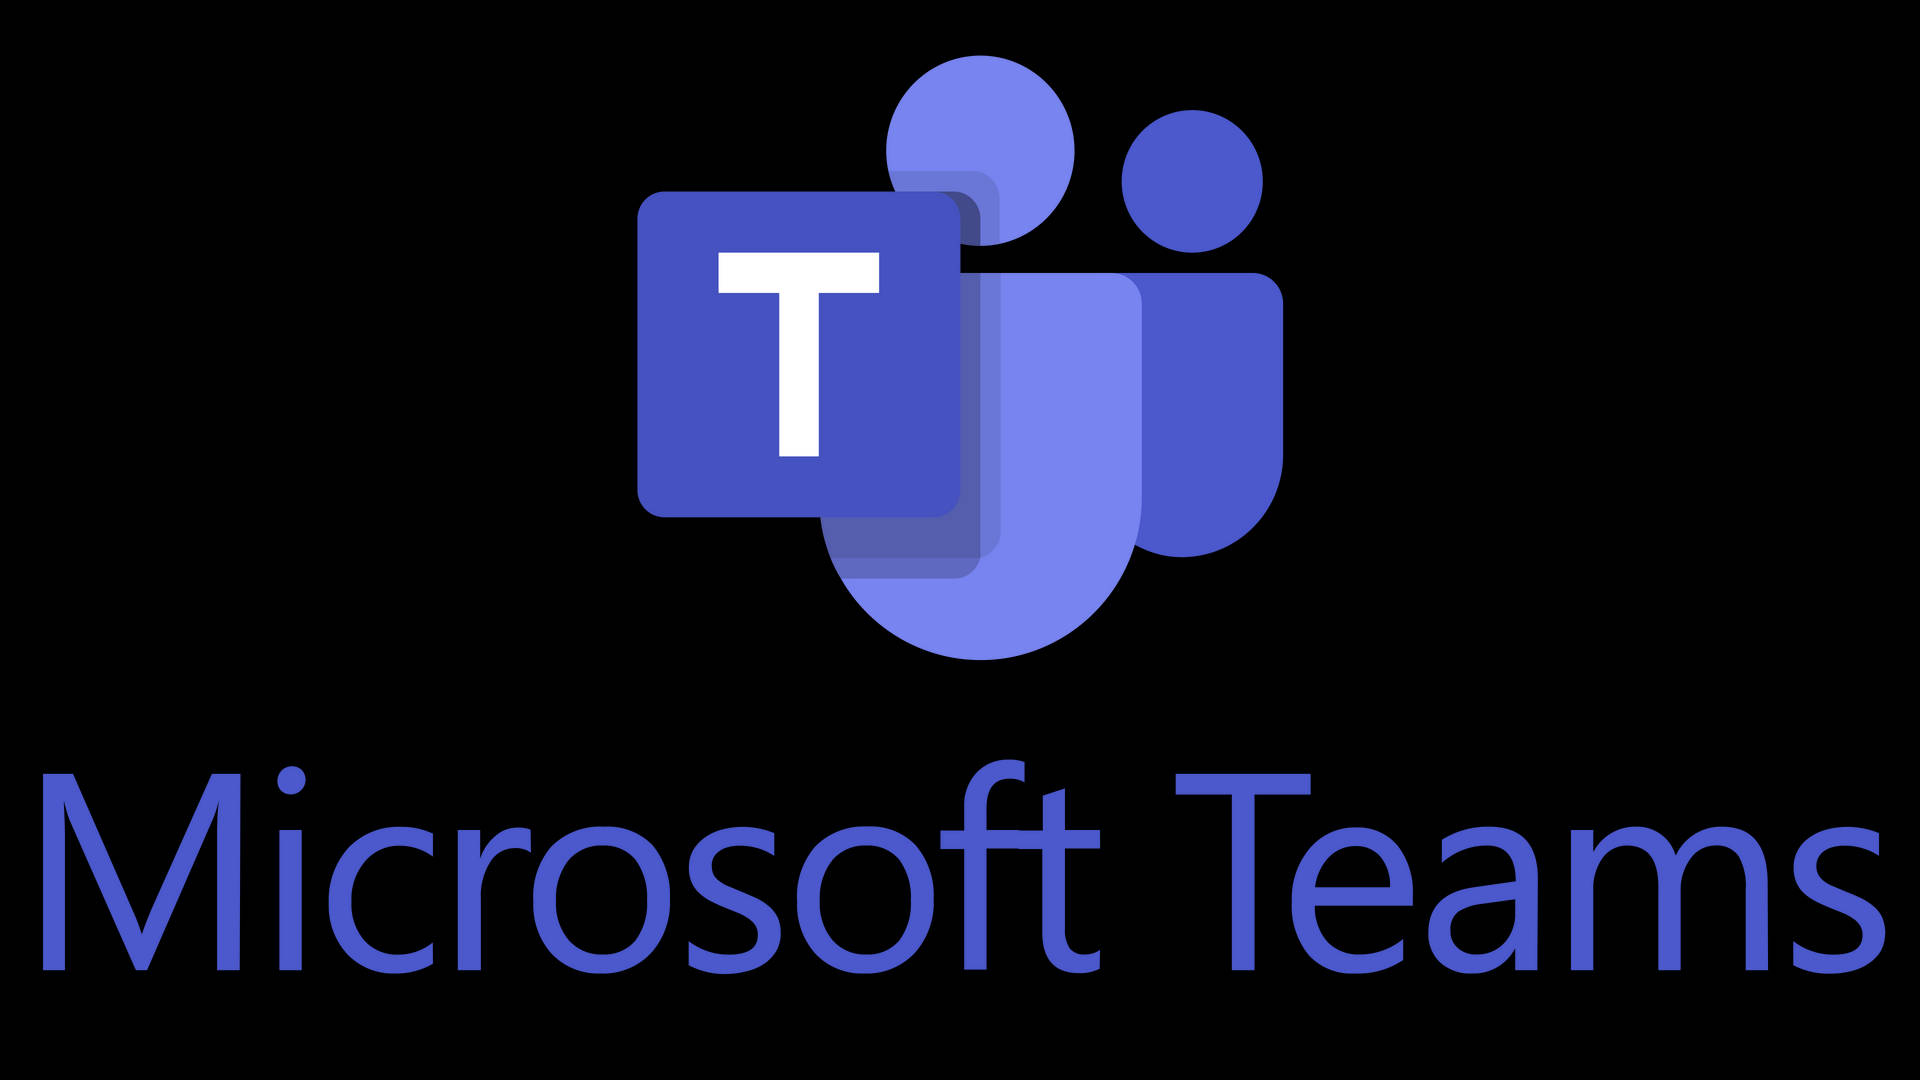 Logotipodel Software Microsoft Teams Fondo de pantalla